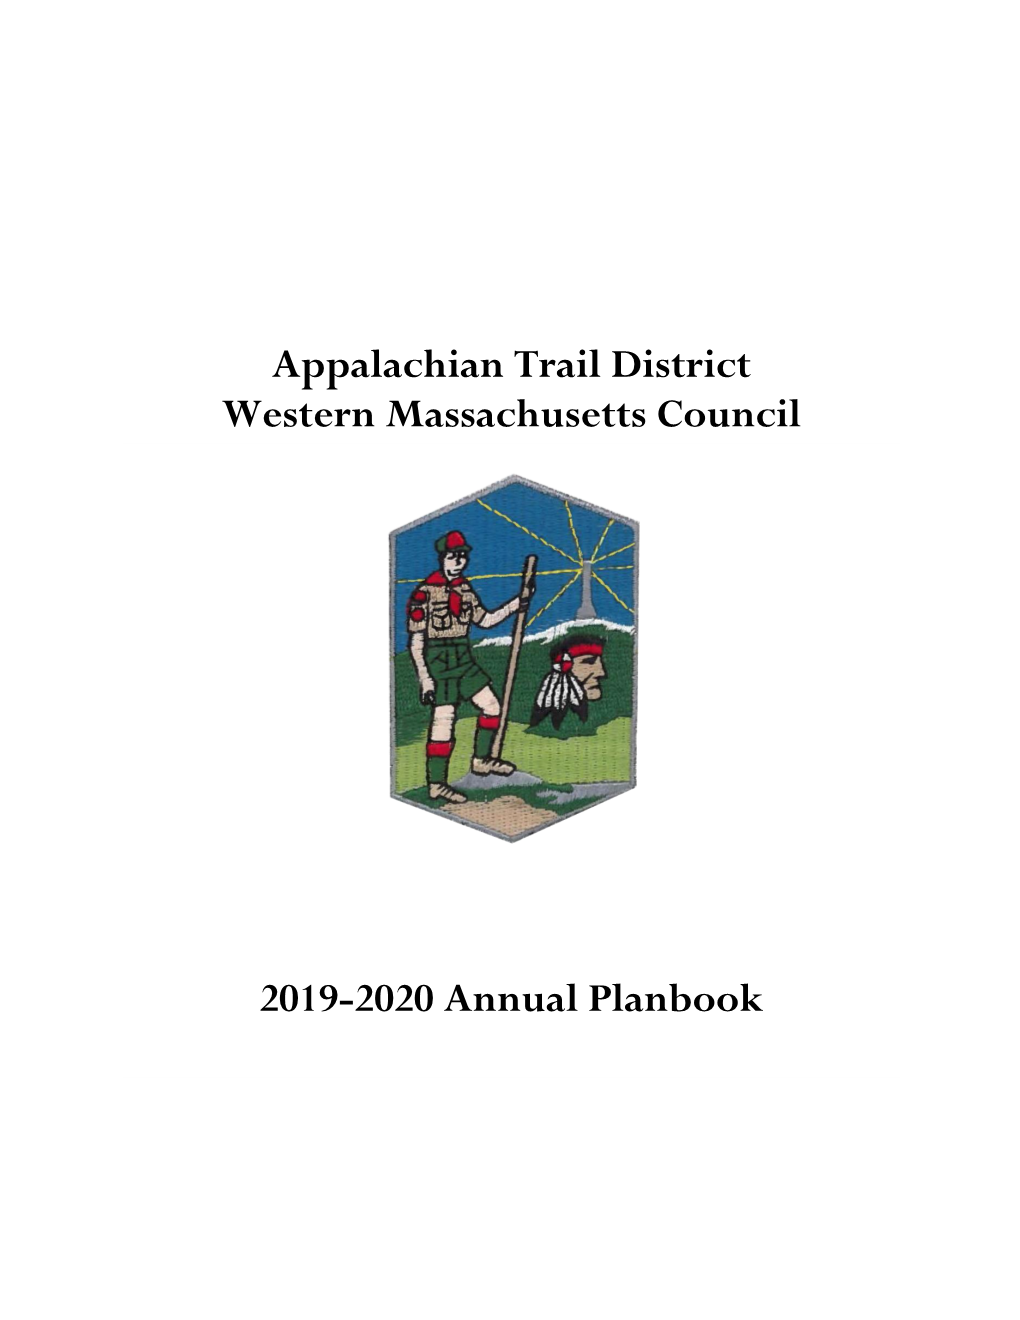 Appalachian Trail District Western Massachusetts Council 2019-2020